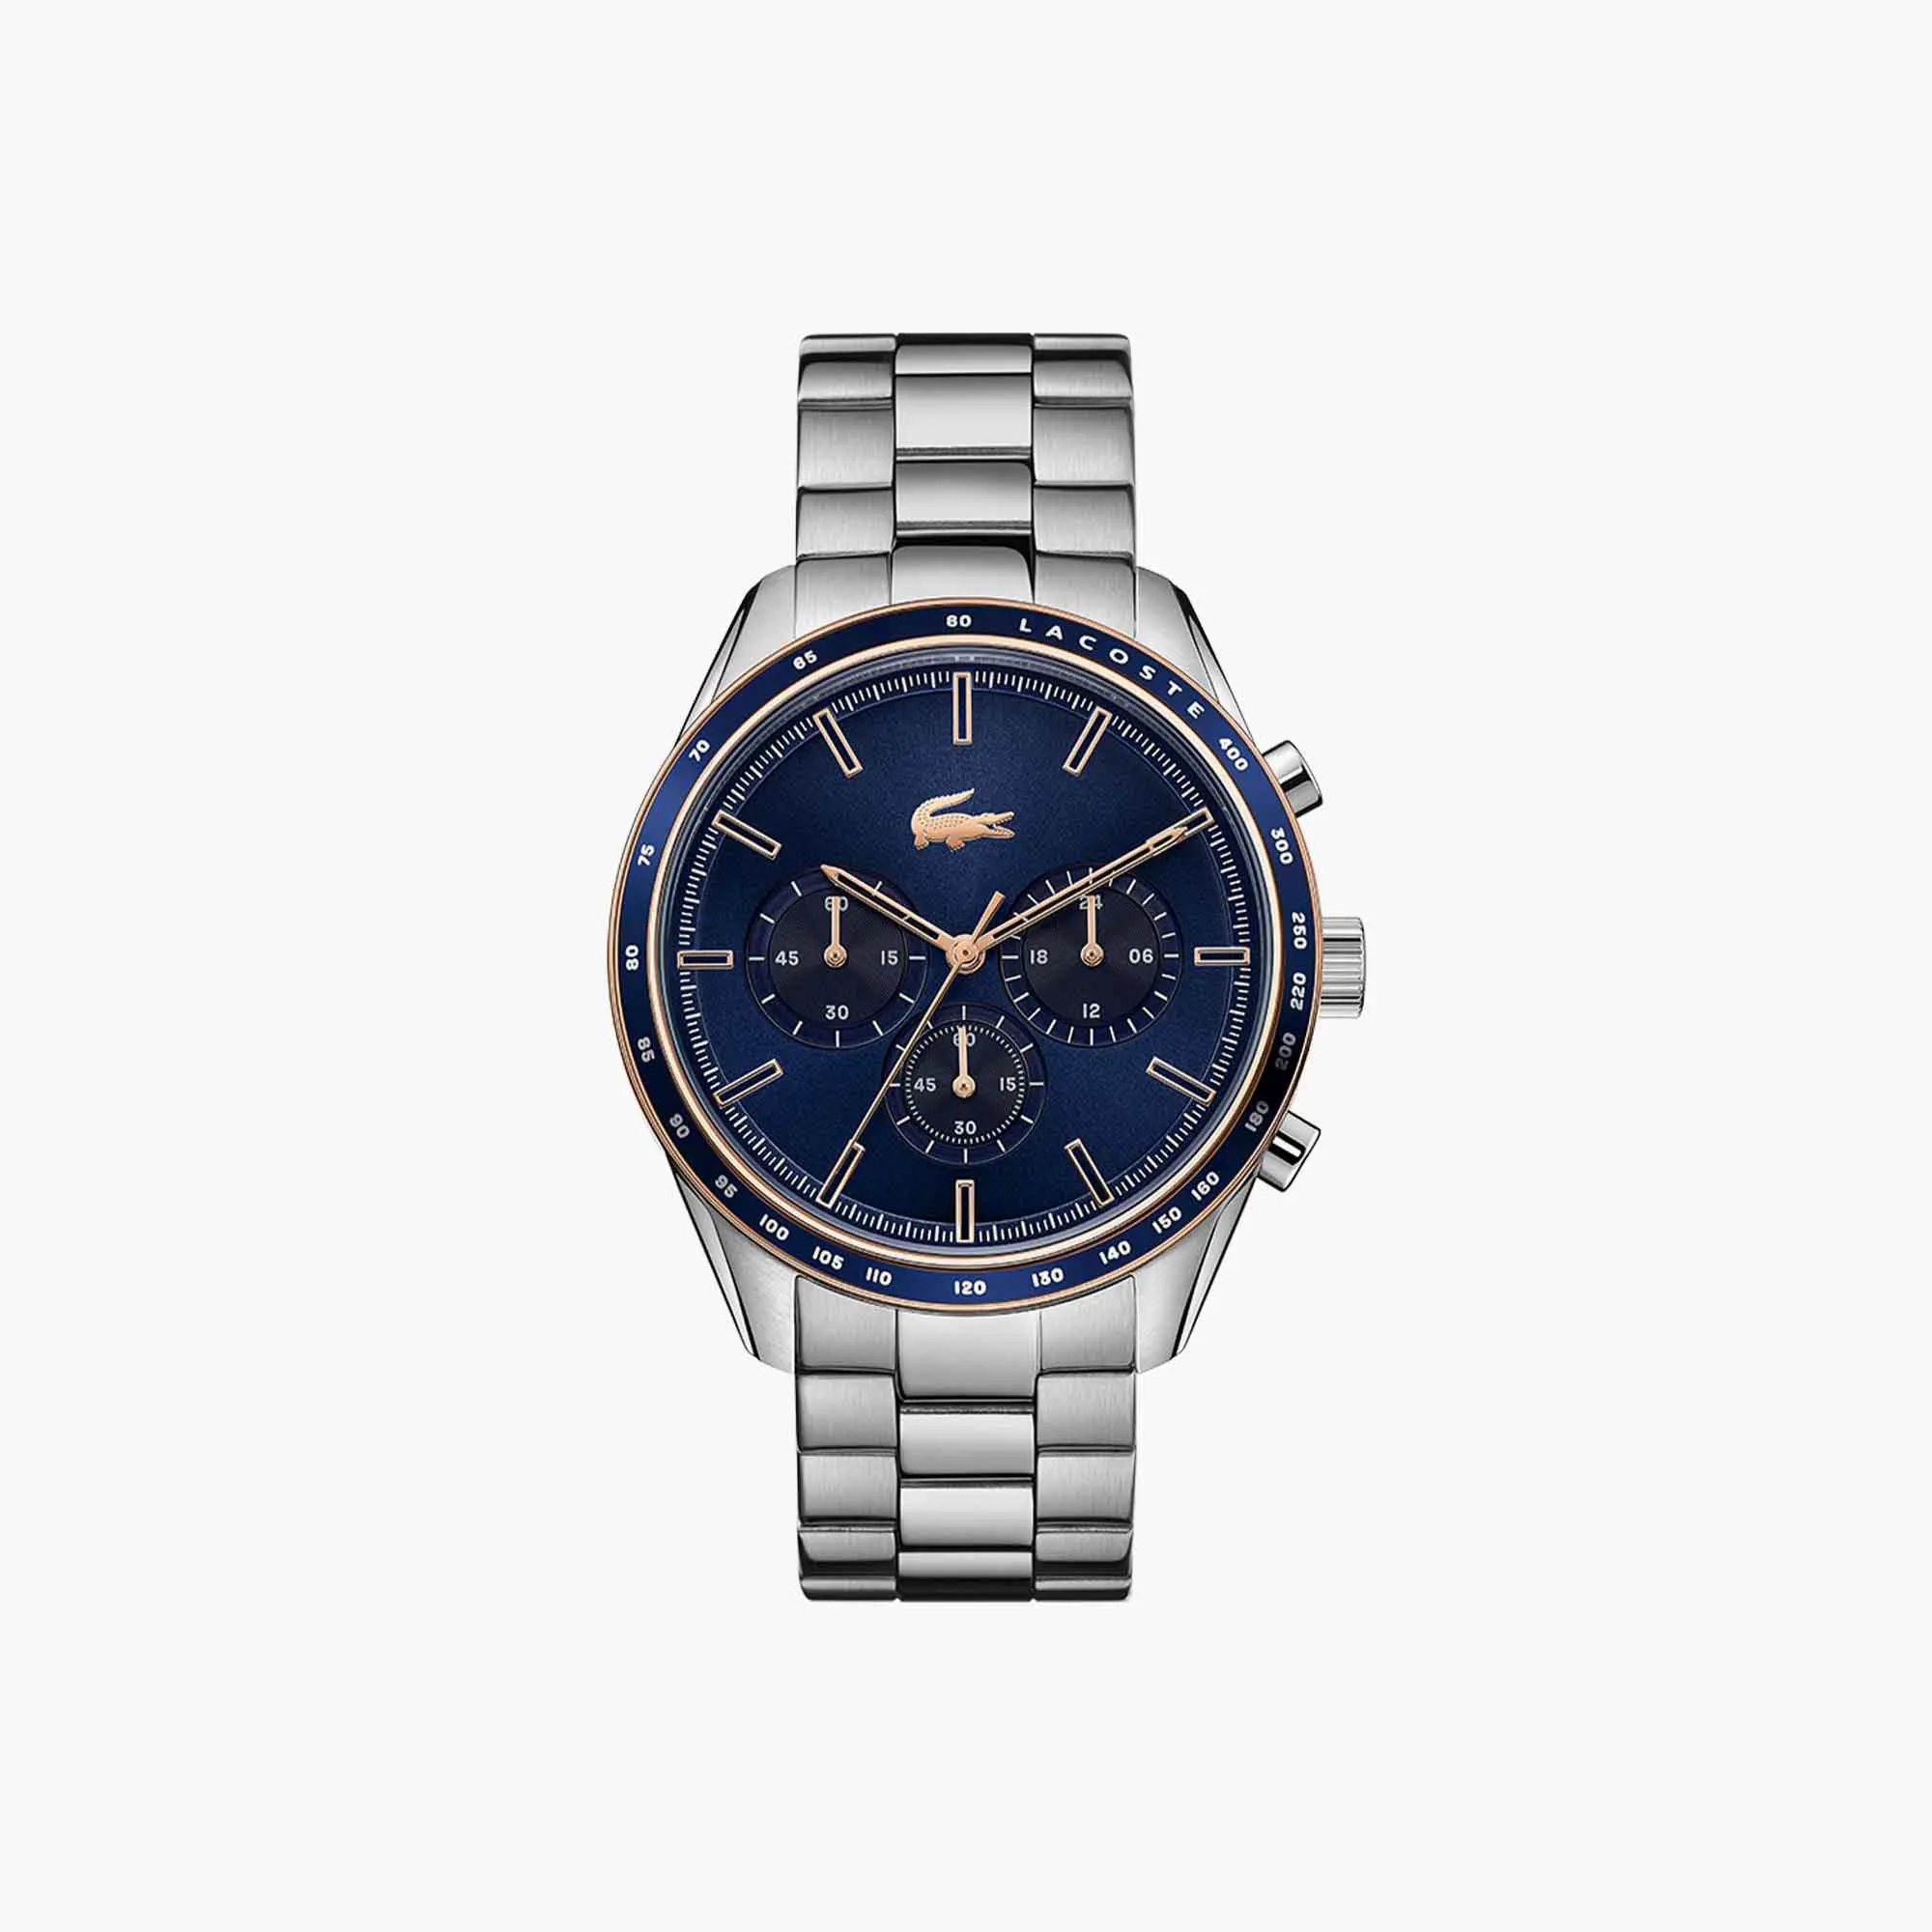 Lacoste Reloj Boston azul marino con cronógrafo y correa de acero inoxidable. 2